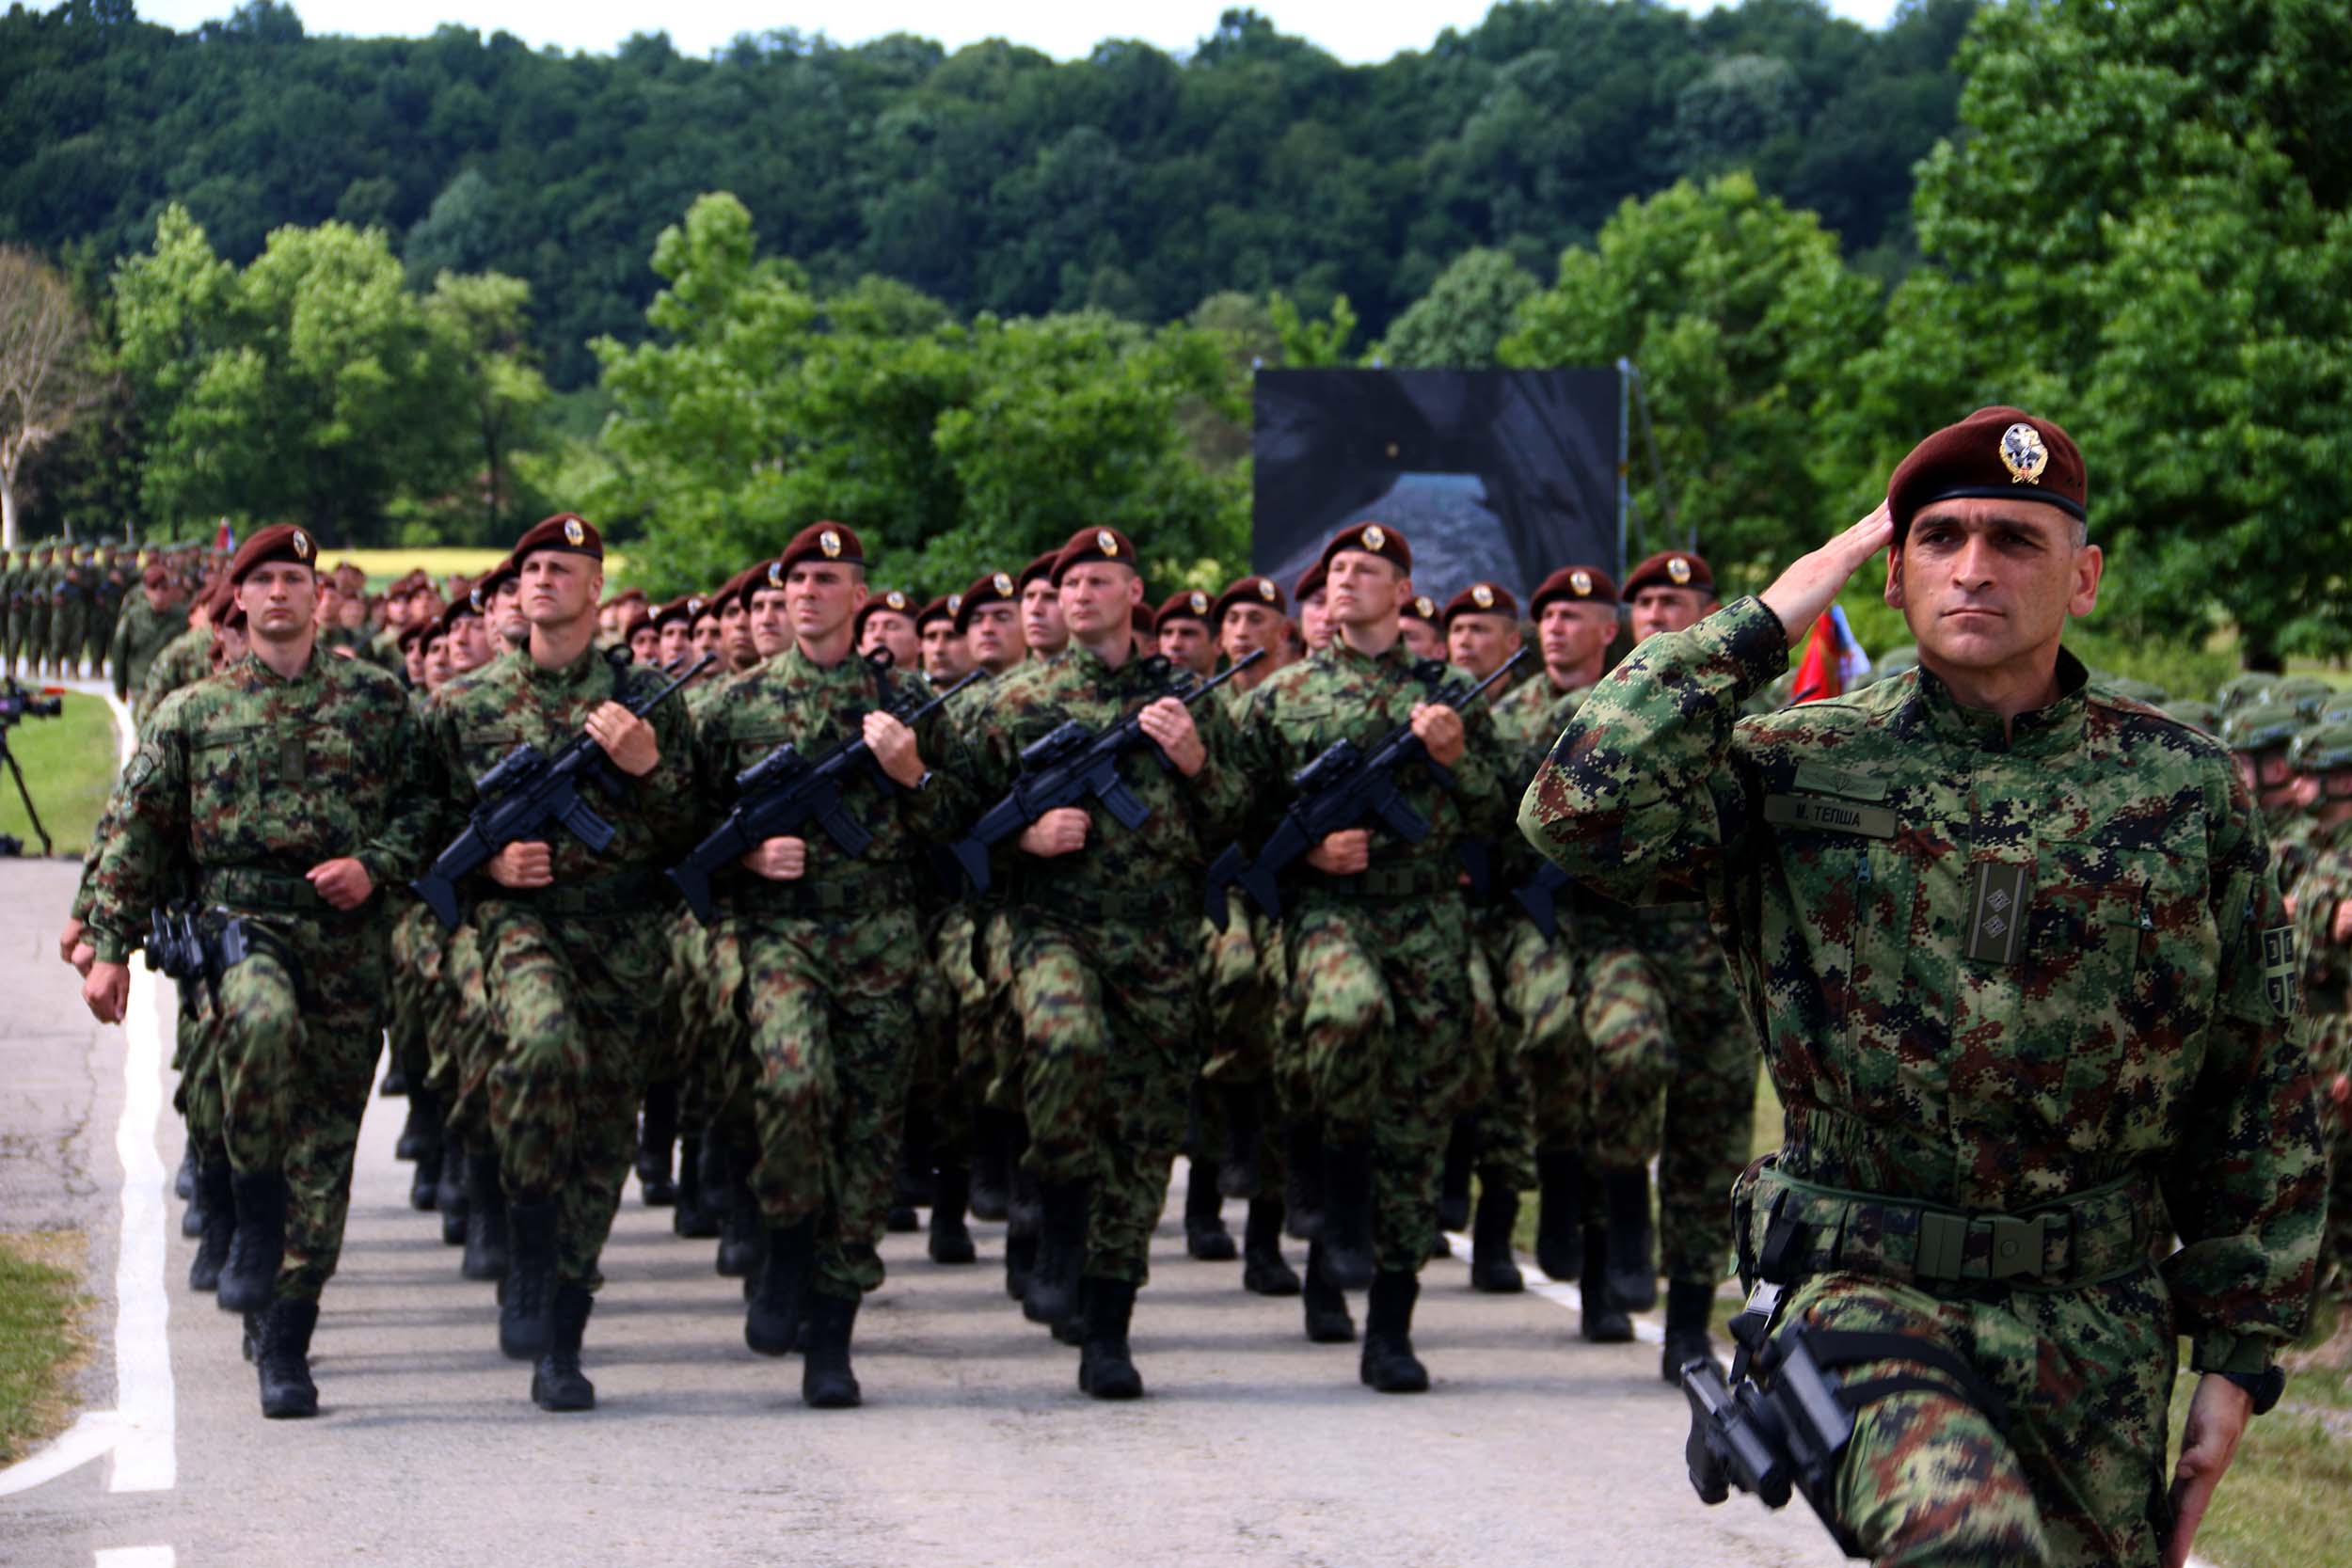 35 бригада сво. 72 Бригада. Застава бригади имени Святого Георгия. 72 Бригада Орр. Специальная бригада Сербии.